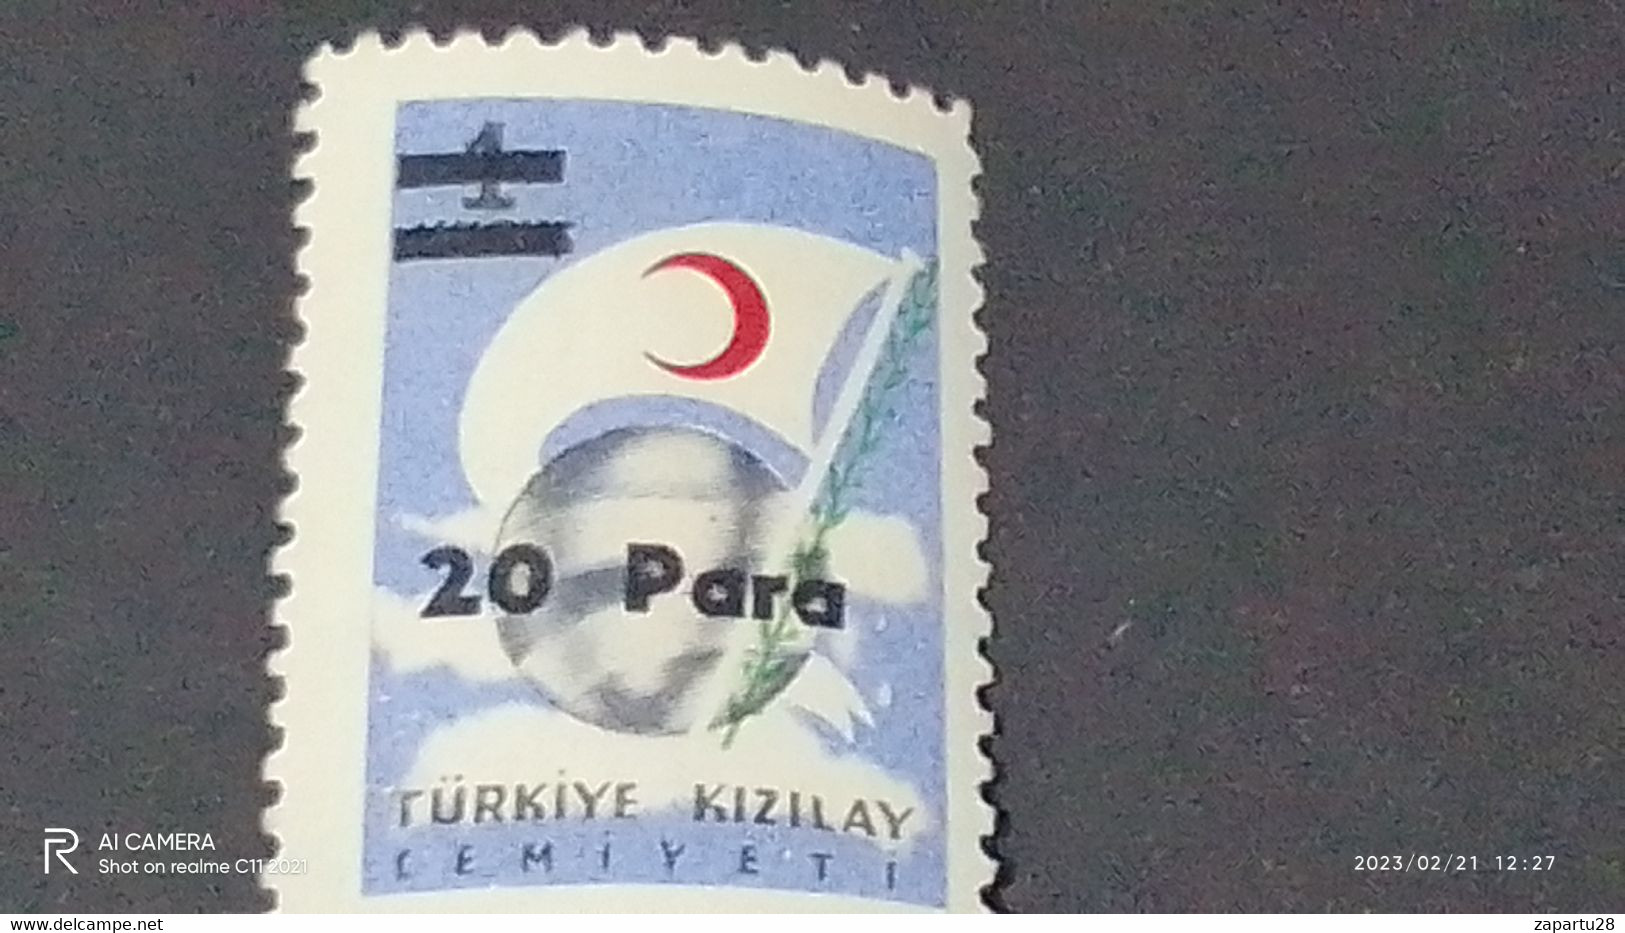 TÜRKEY--YARDIM PULLARI-1950-60  KIZILAY CEMİYETİ  2.50K  DAMGASIZ - Charity Stamps